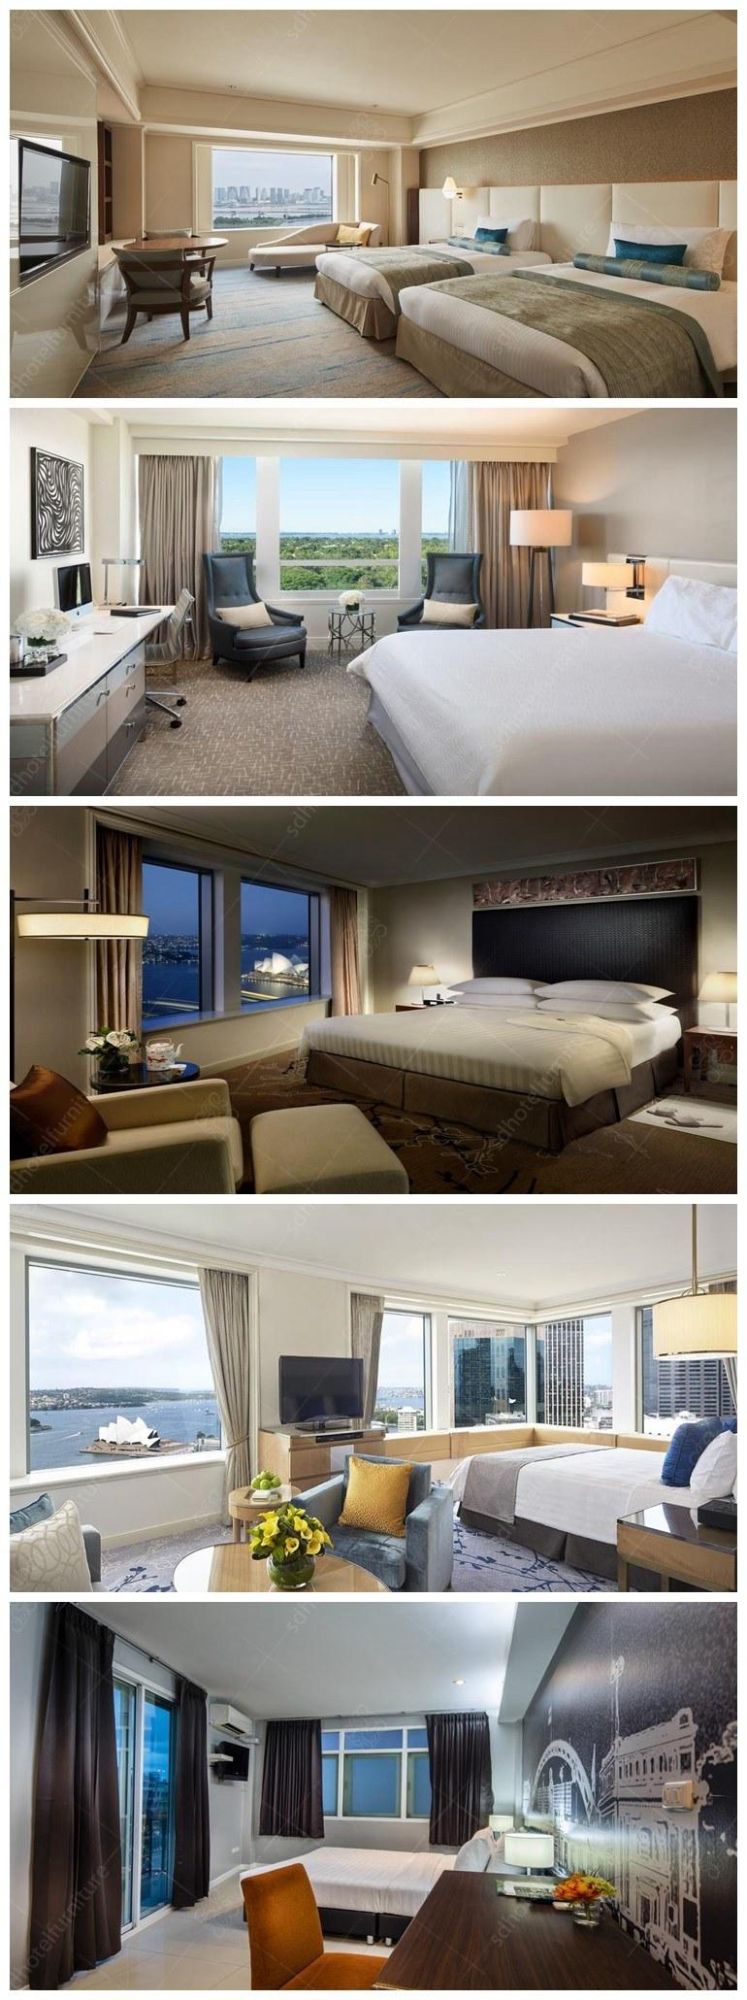 Laminate MDF Economic Disscount Set Modern 5-Star Luxury Custom Room Furniture SD1147